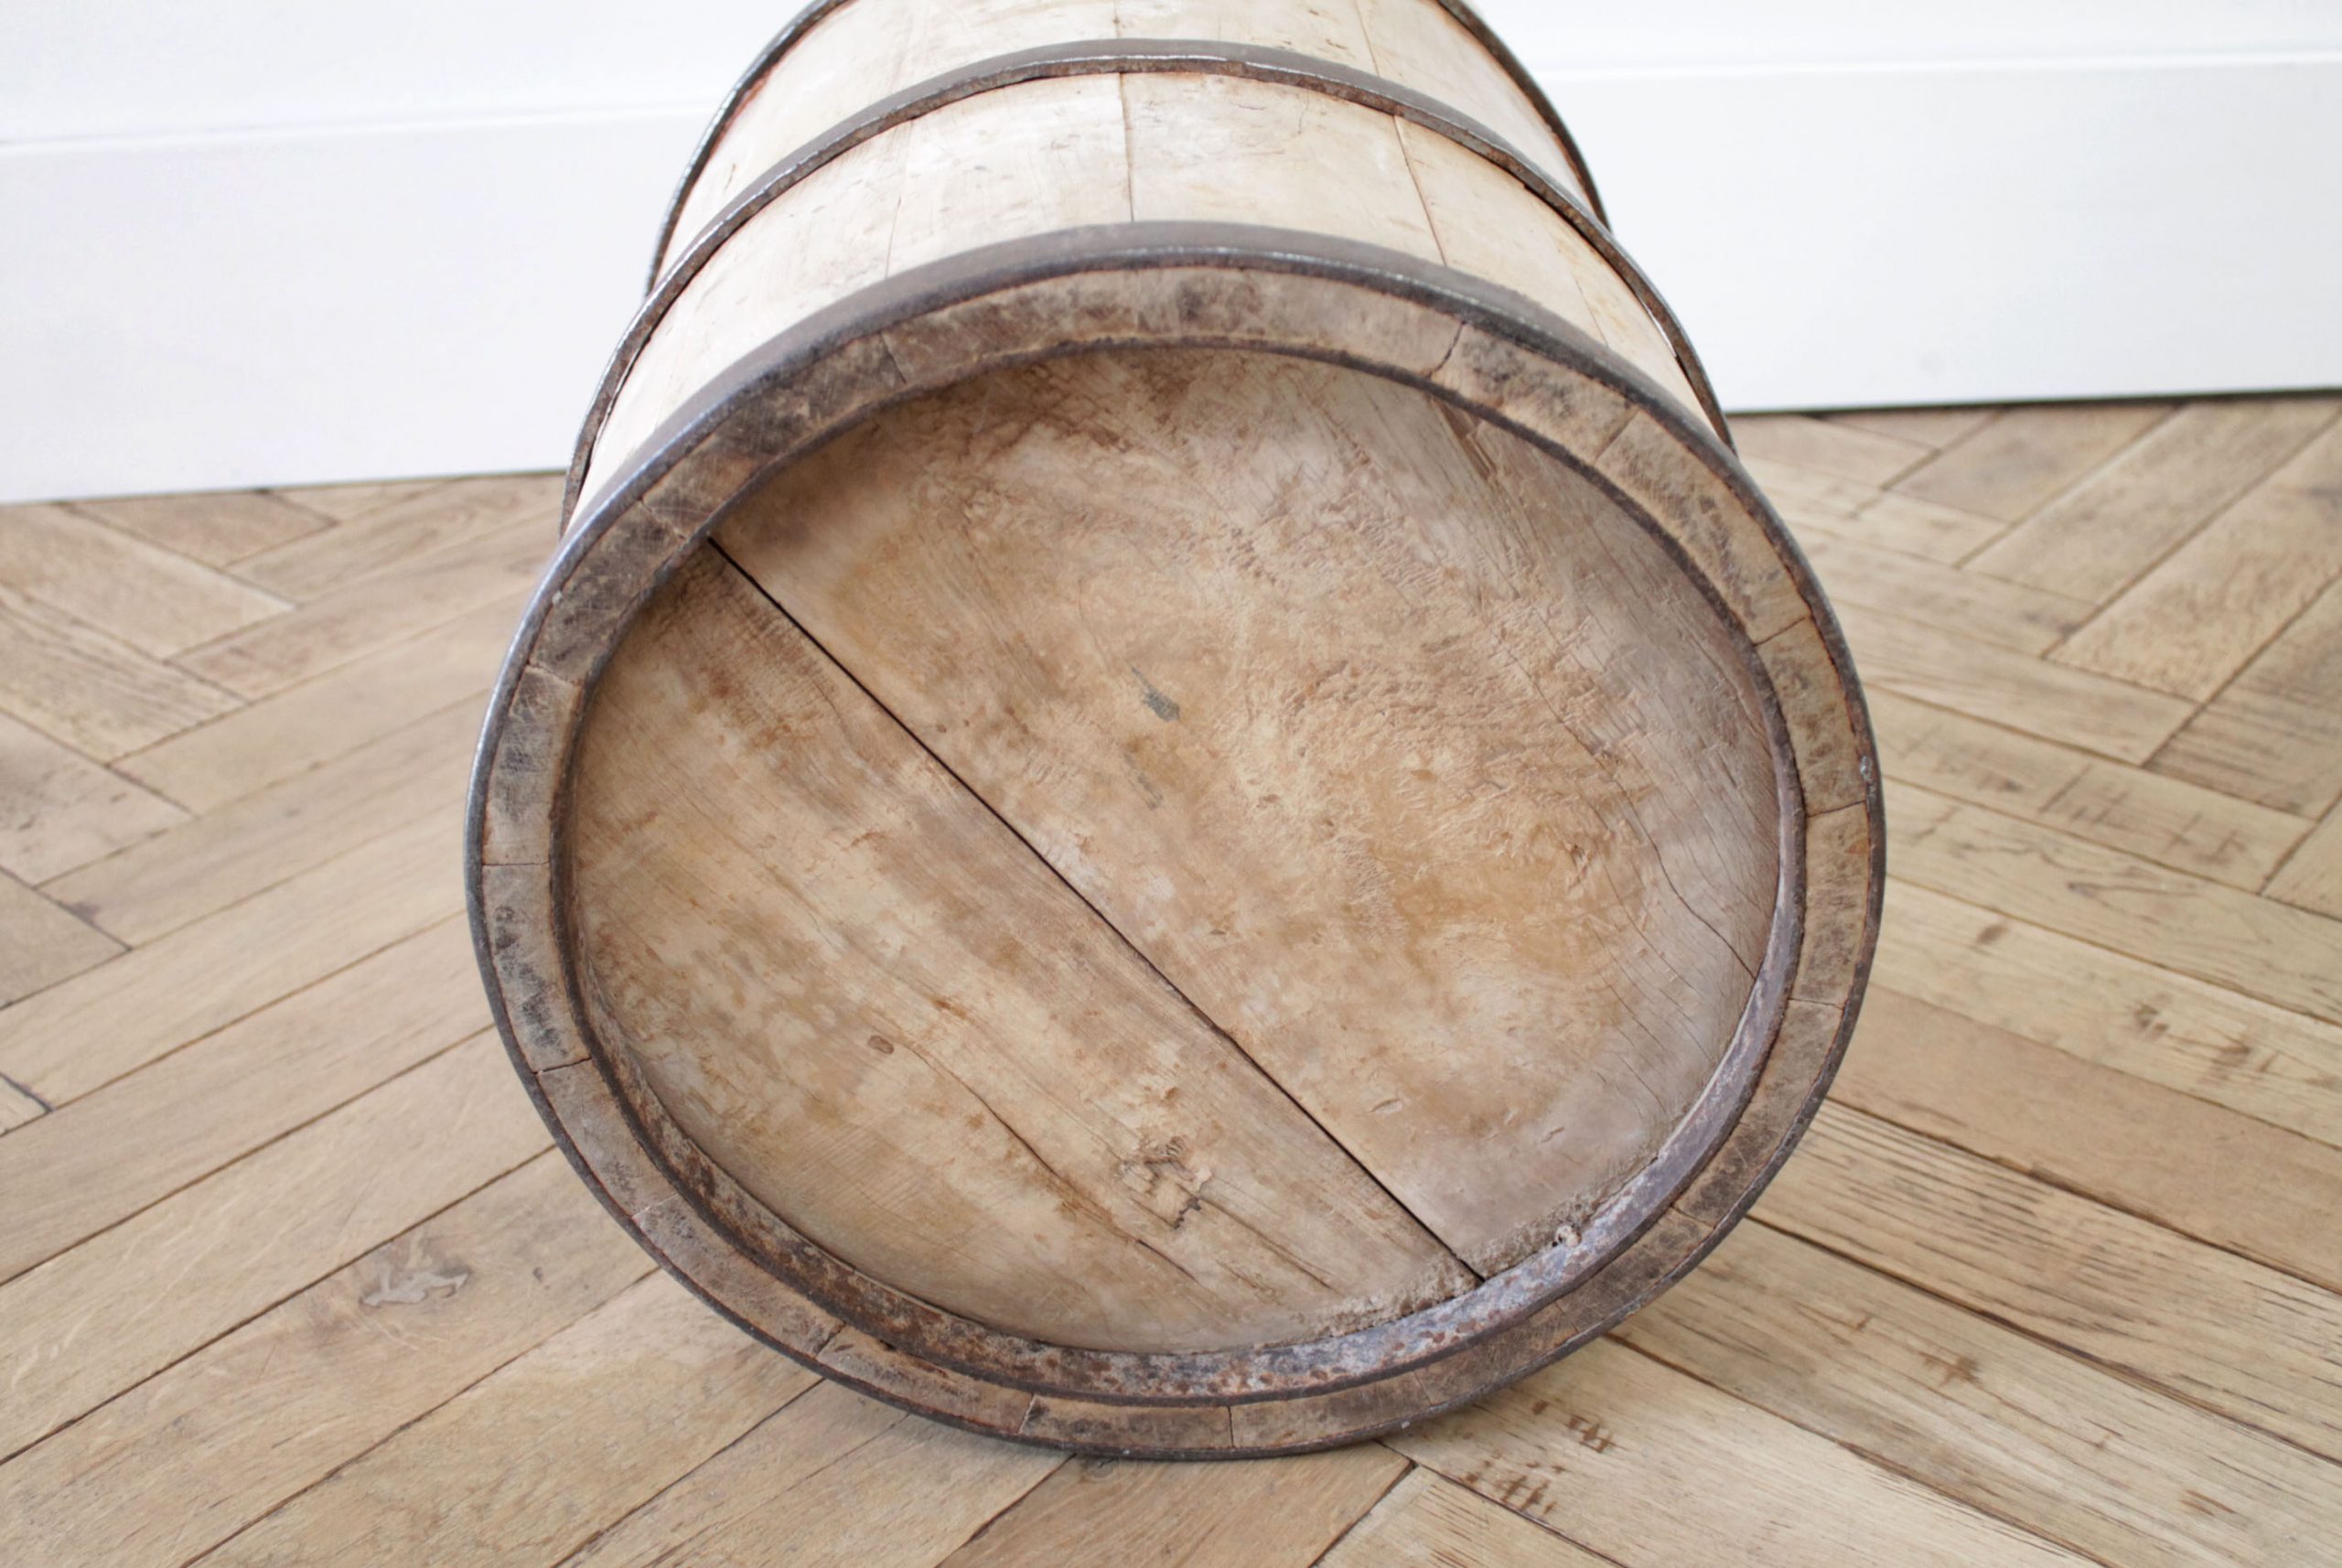 Vintage Chinese Wooden Decorative Bucket